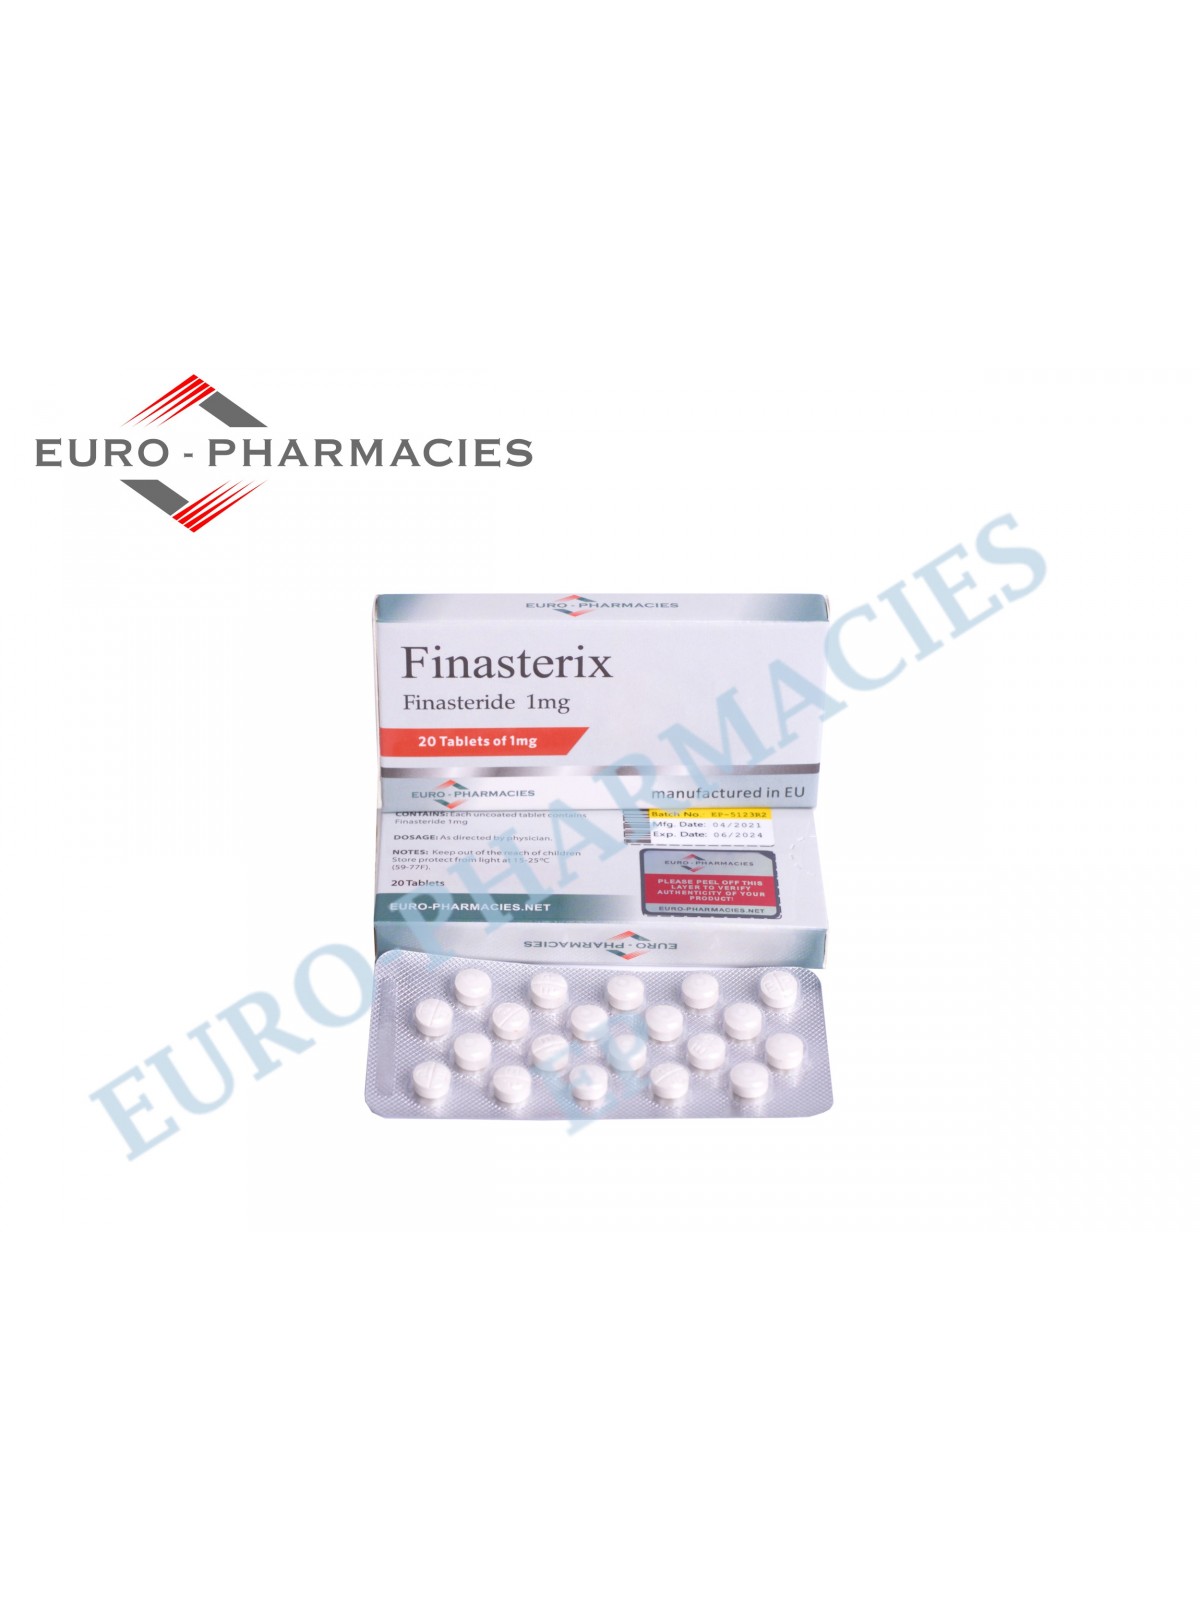 Finasterix - 1mg/tab - 20 pills/blister - Euro-Pharmacies